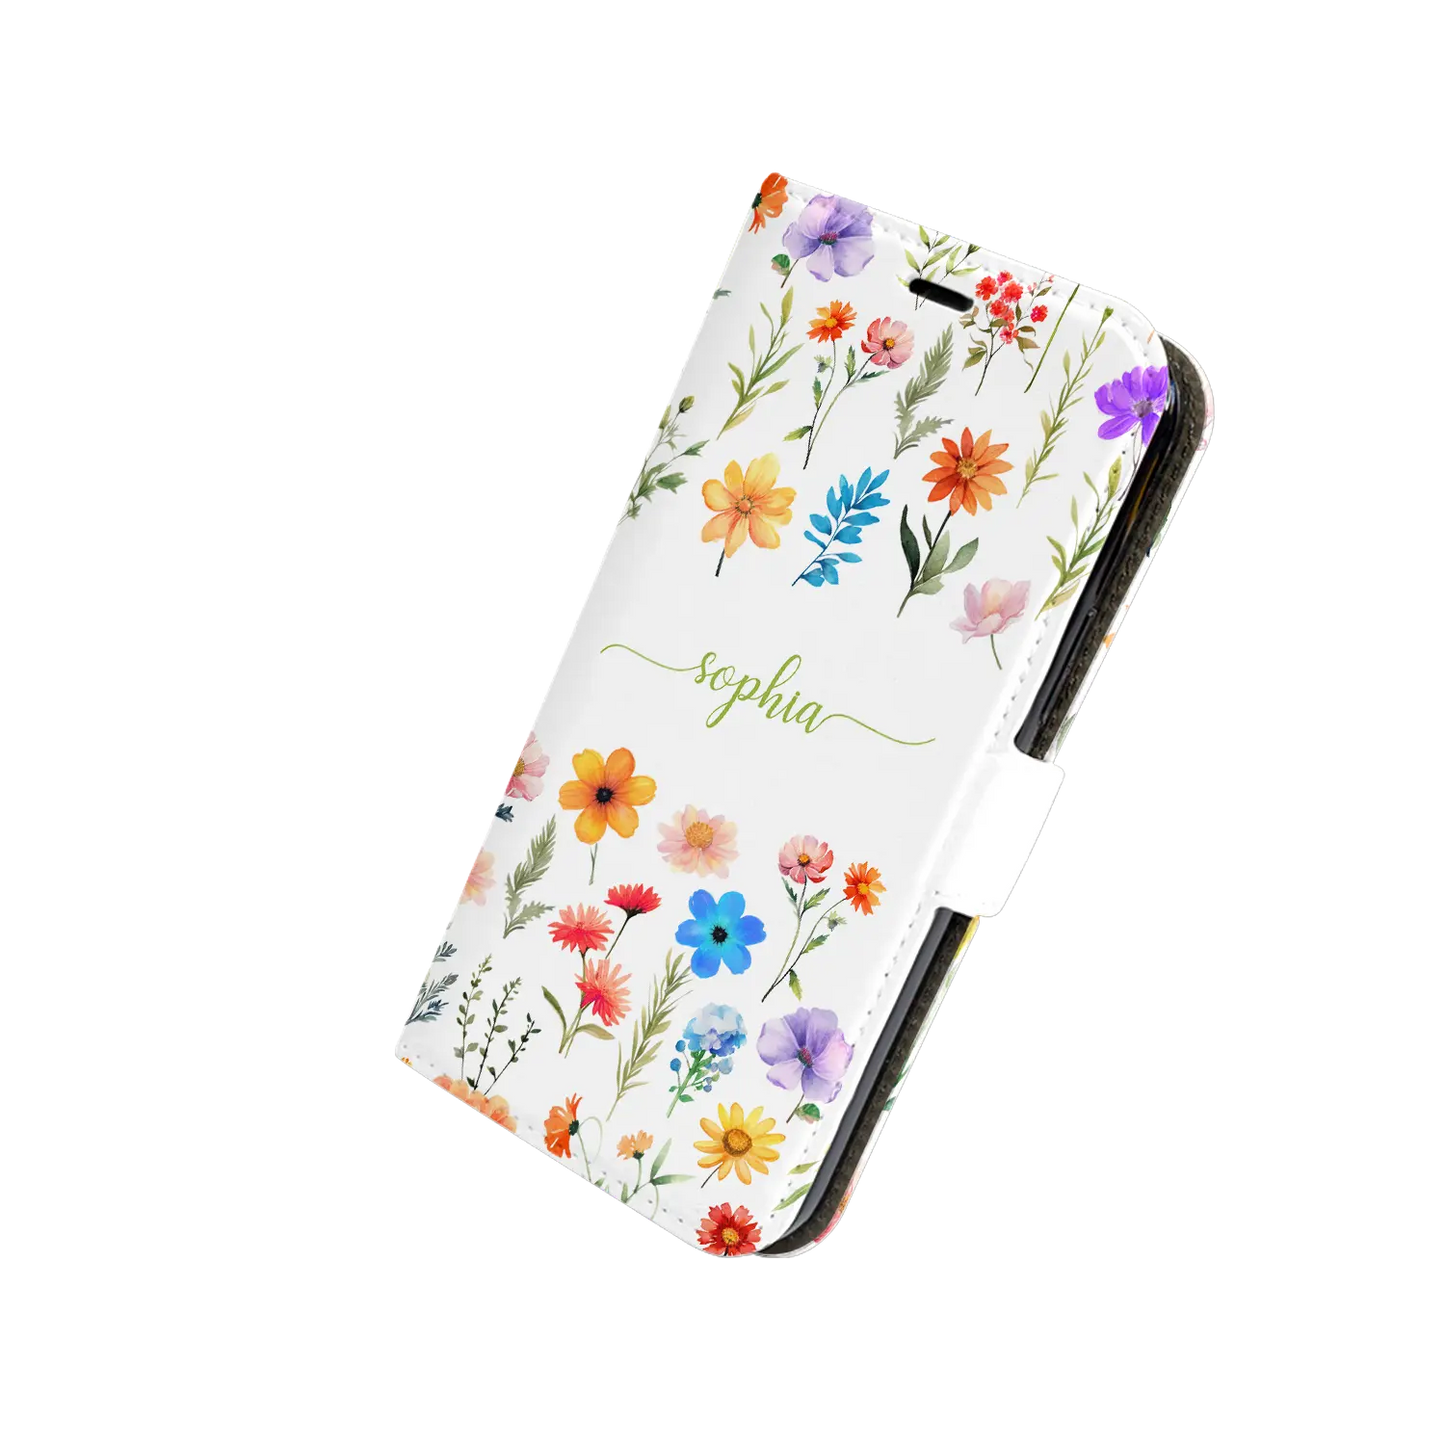 Flowers - Custom Galaxy S case